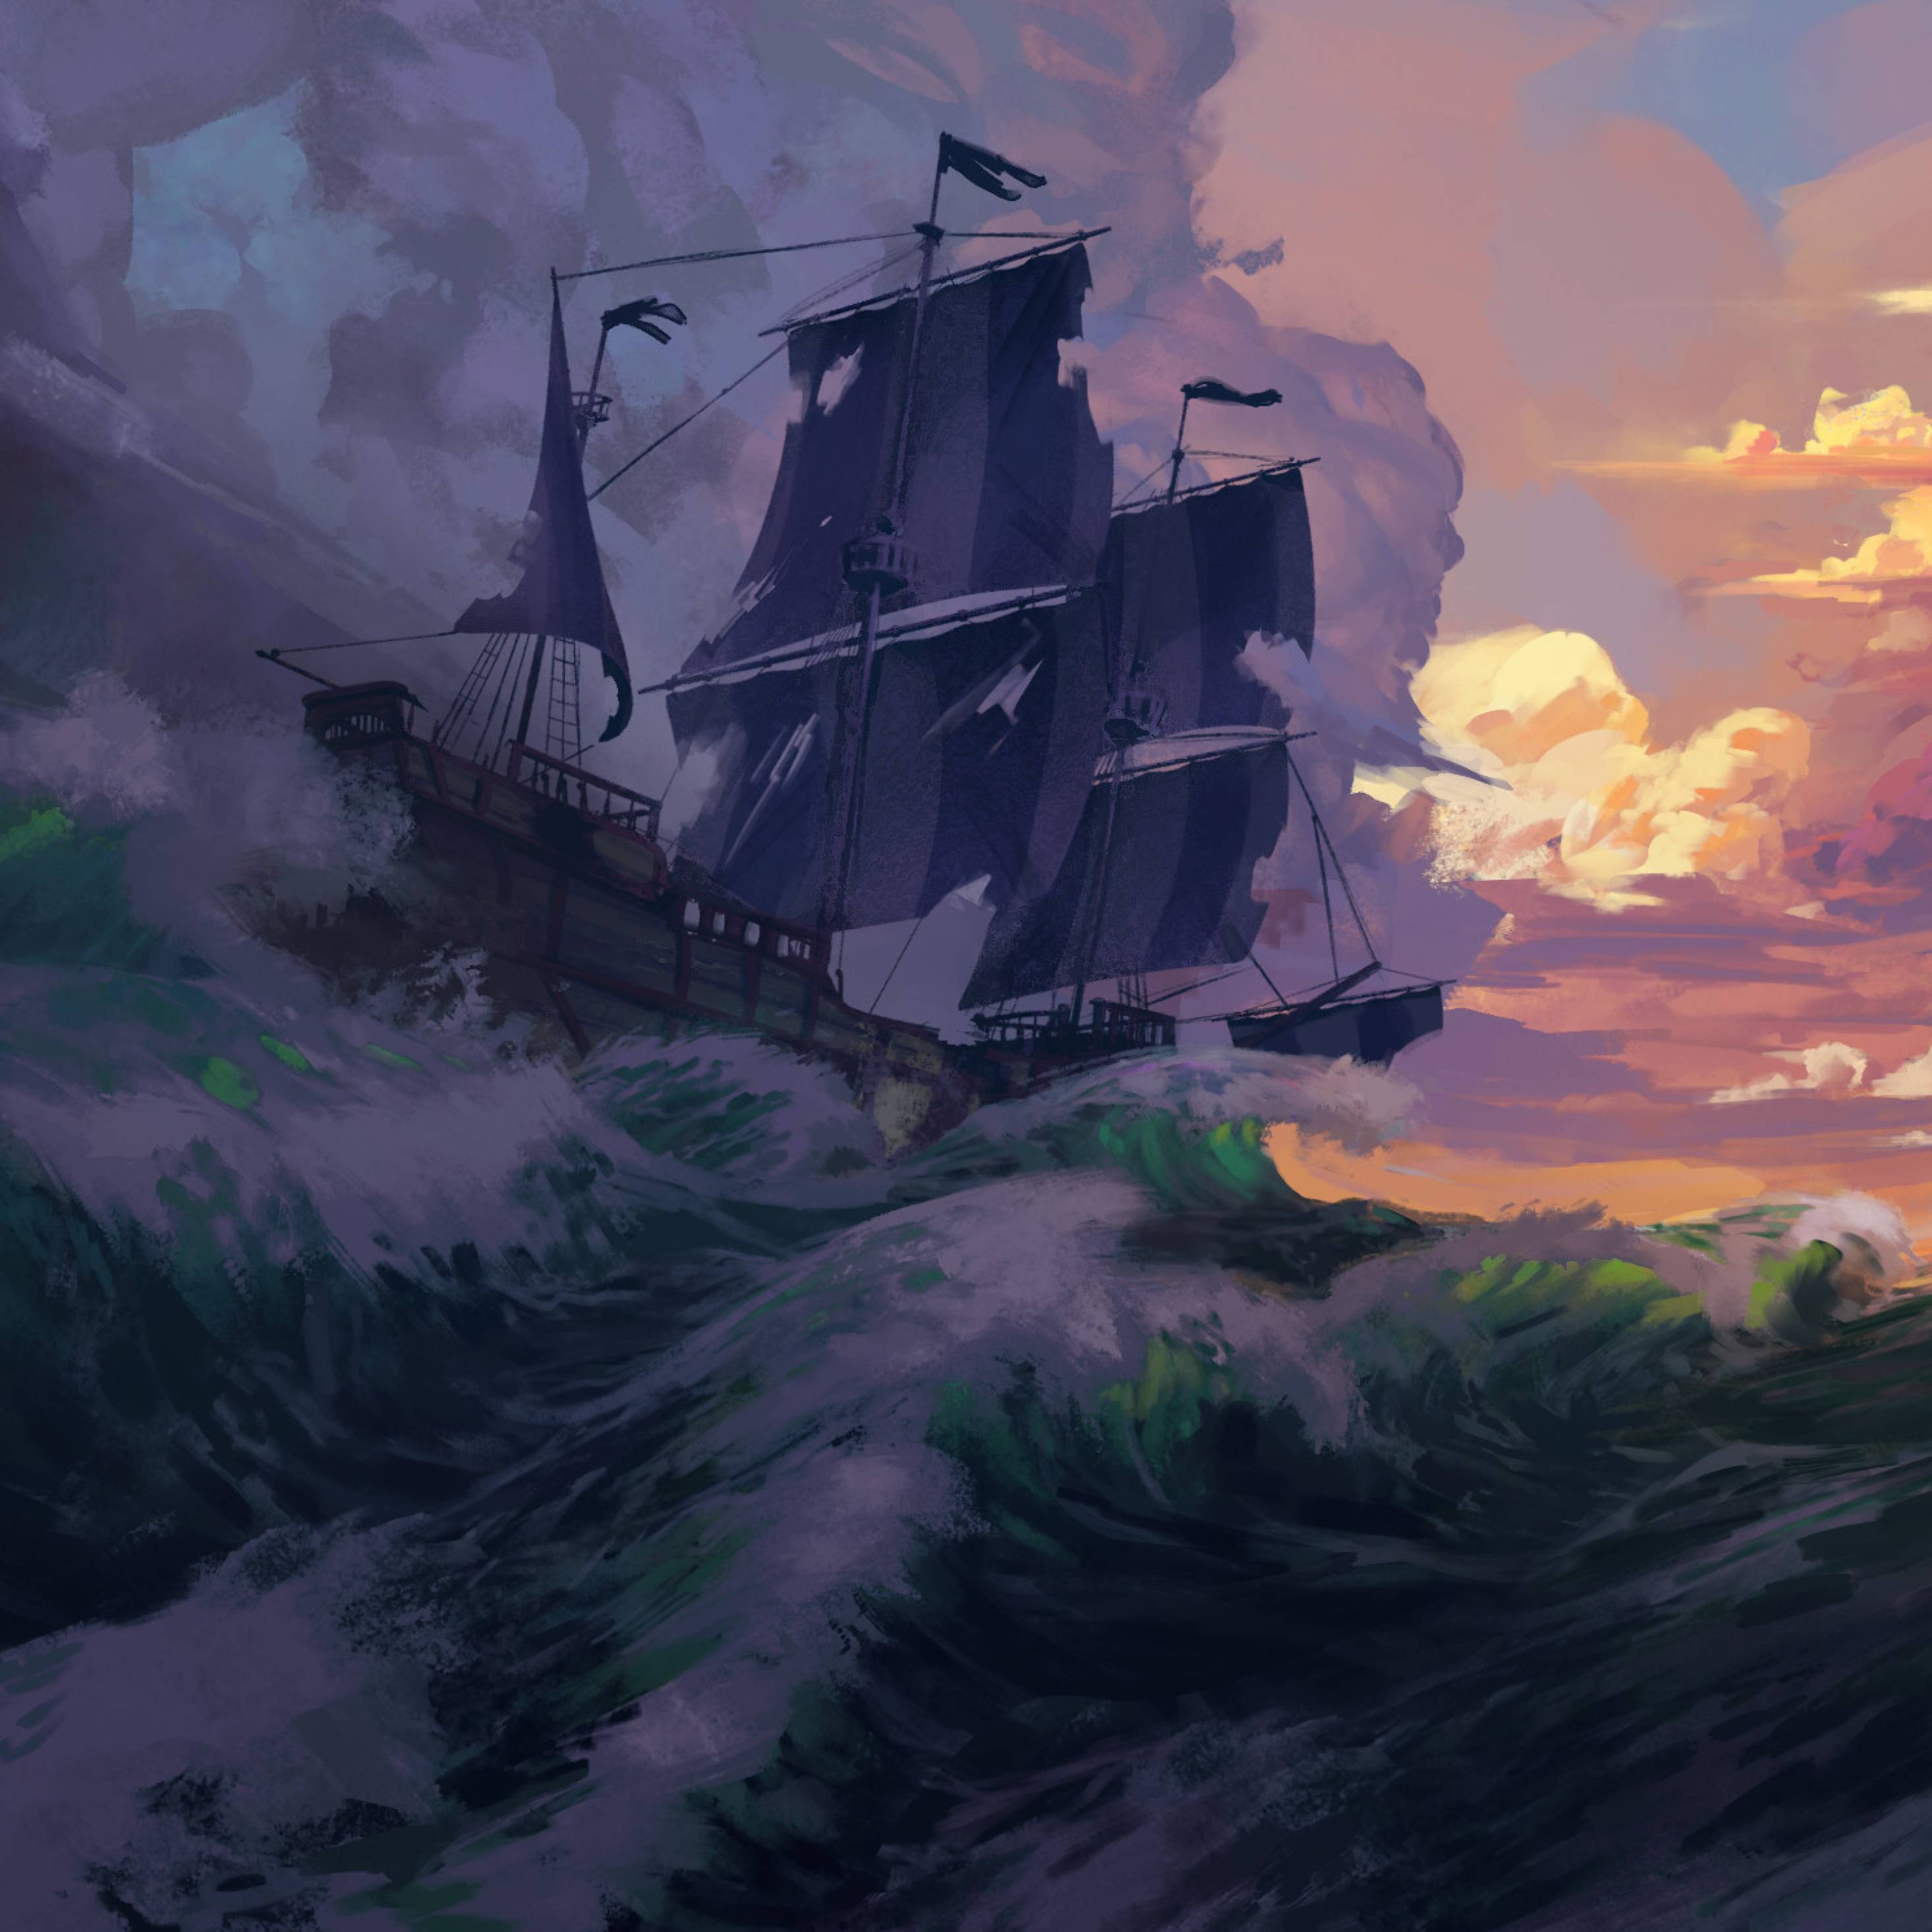 Artistic Sailing Ship in Ocean iPad Pro Retina Display Wallpaper, HD Fantasy 4K Wallpaper, Image, Photo and Background